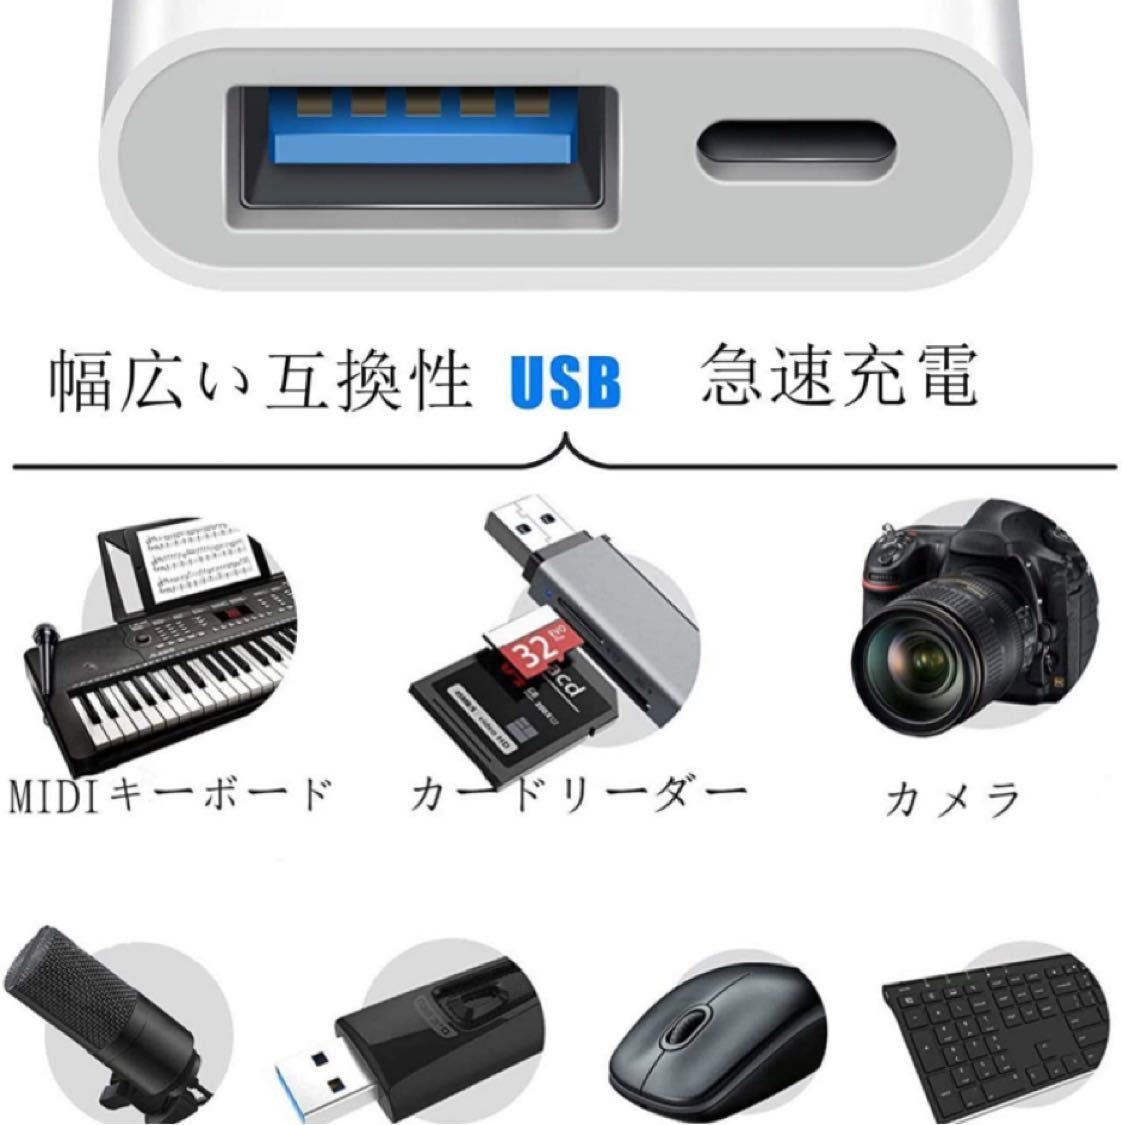 USB変換アダプタ i-Phone/i-Padに適用 2in1 USB変換OTG機能双方向 高速転送 i-Phone/i-Pad高速充電専用アダプタ